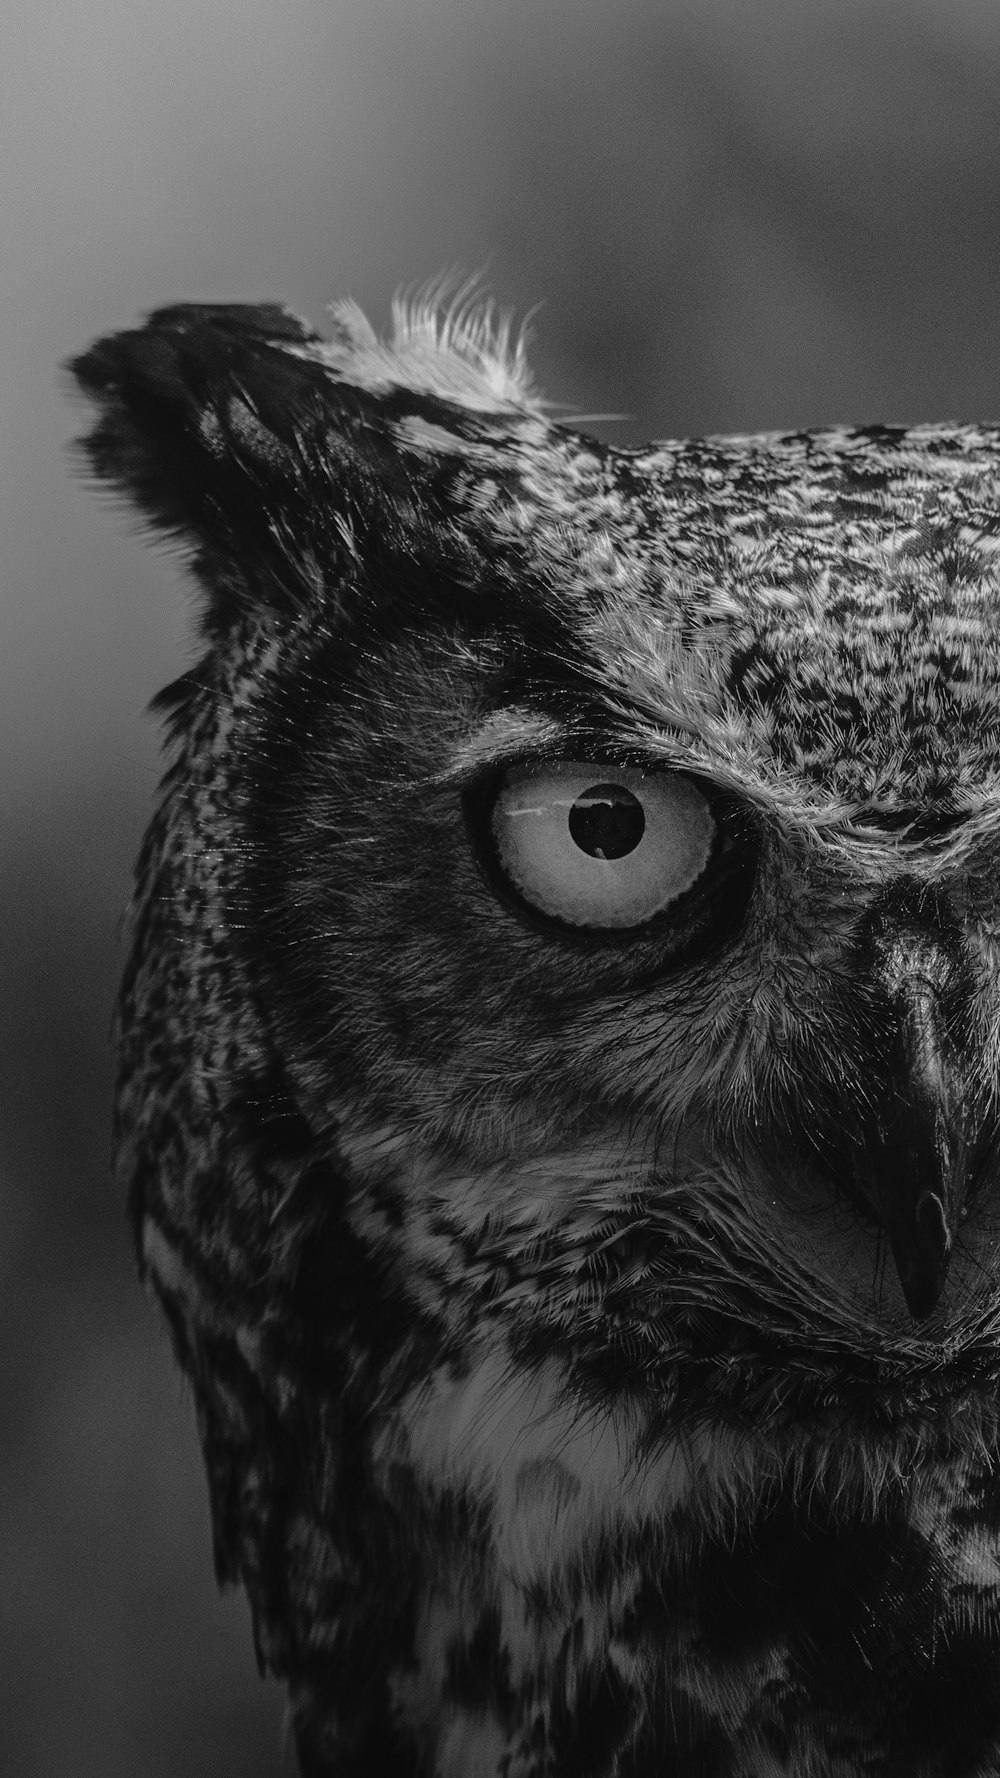 grayscale photo of owl head